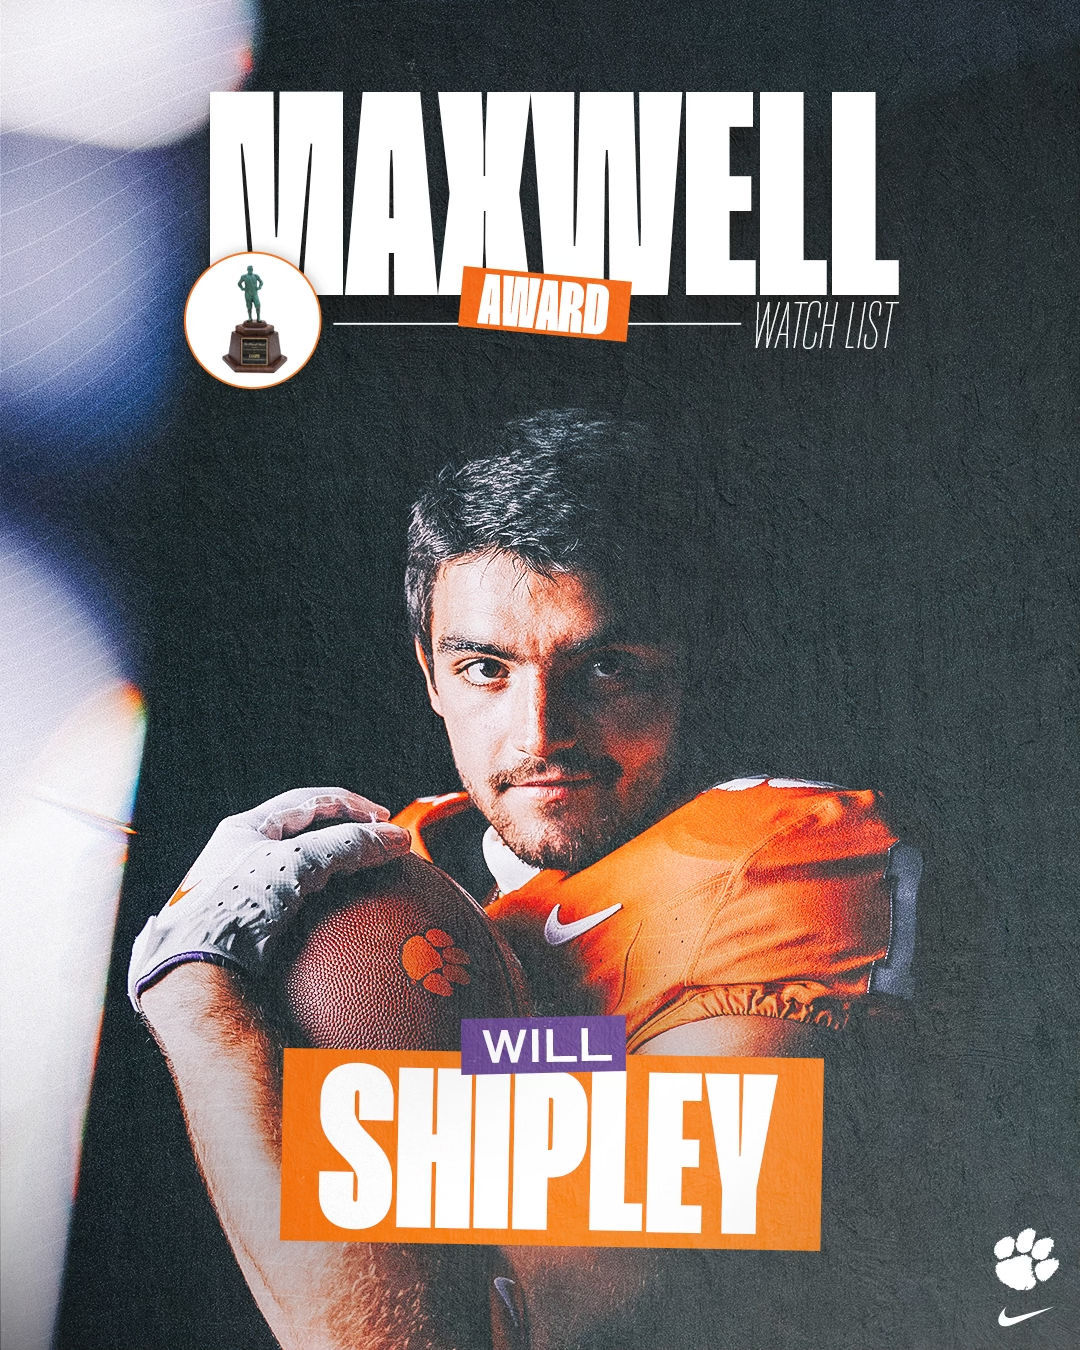 Shipley Placed on Maxwell Award Watch List